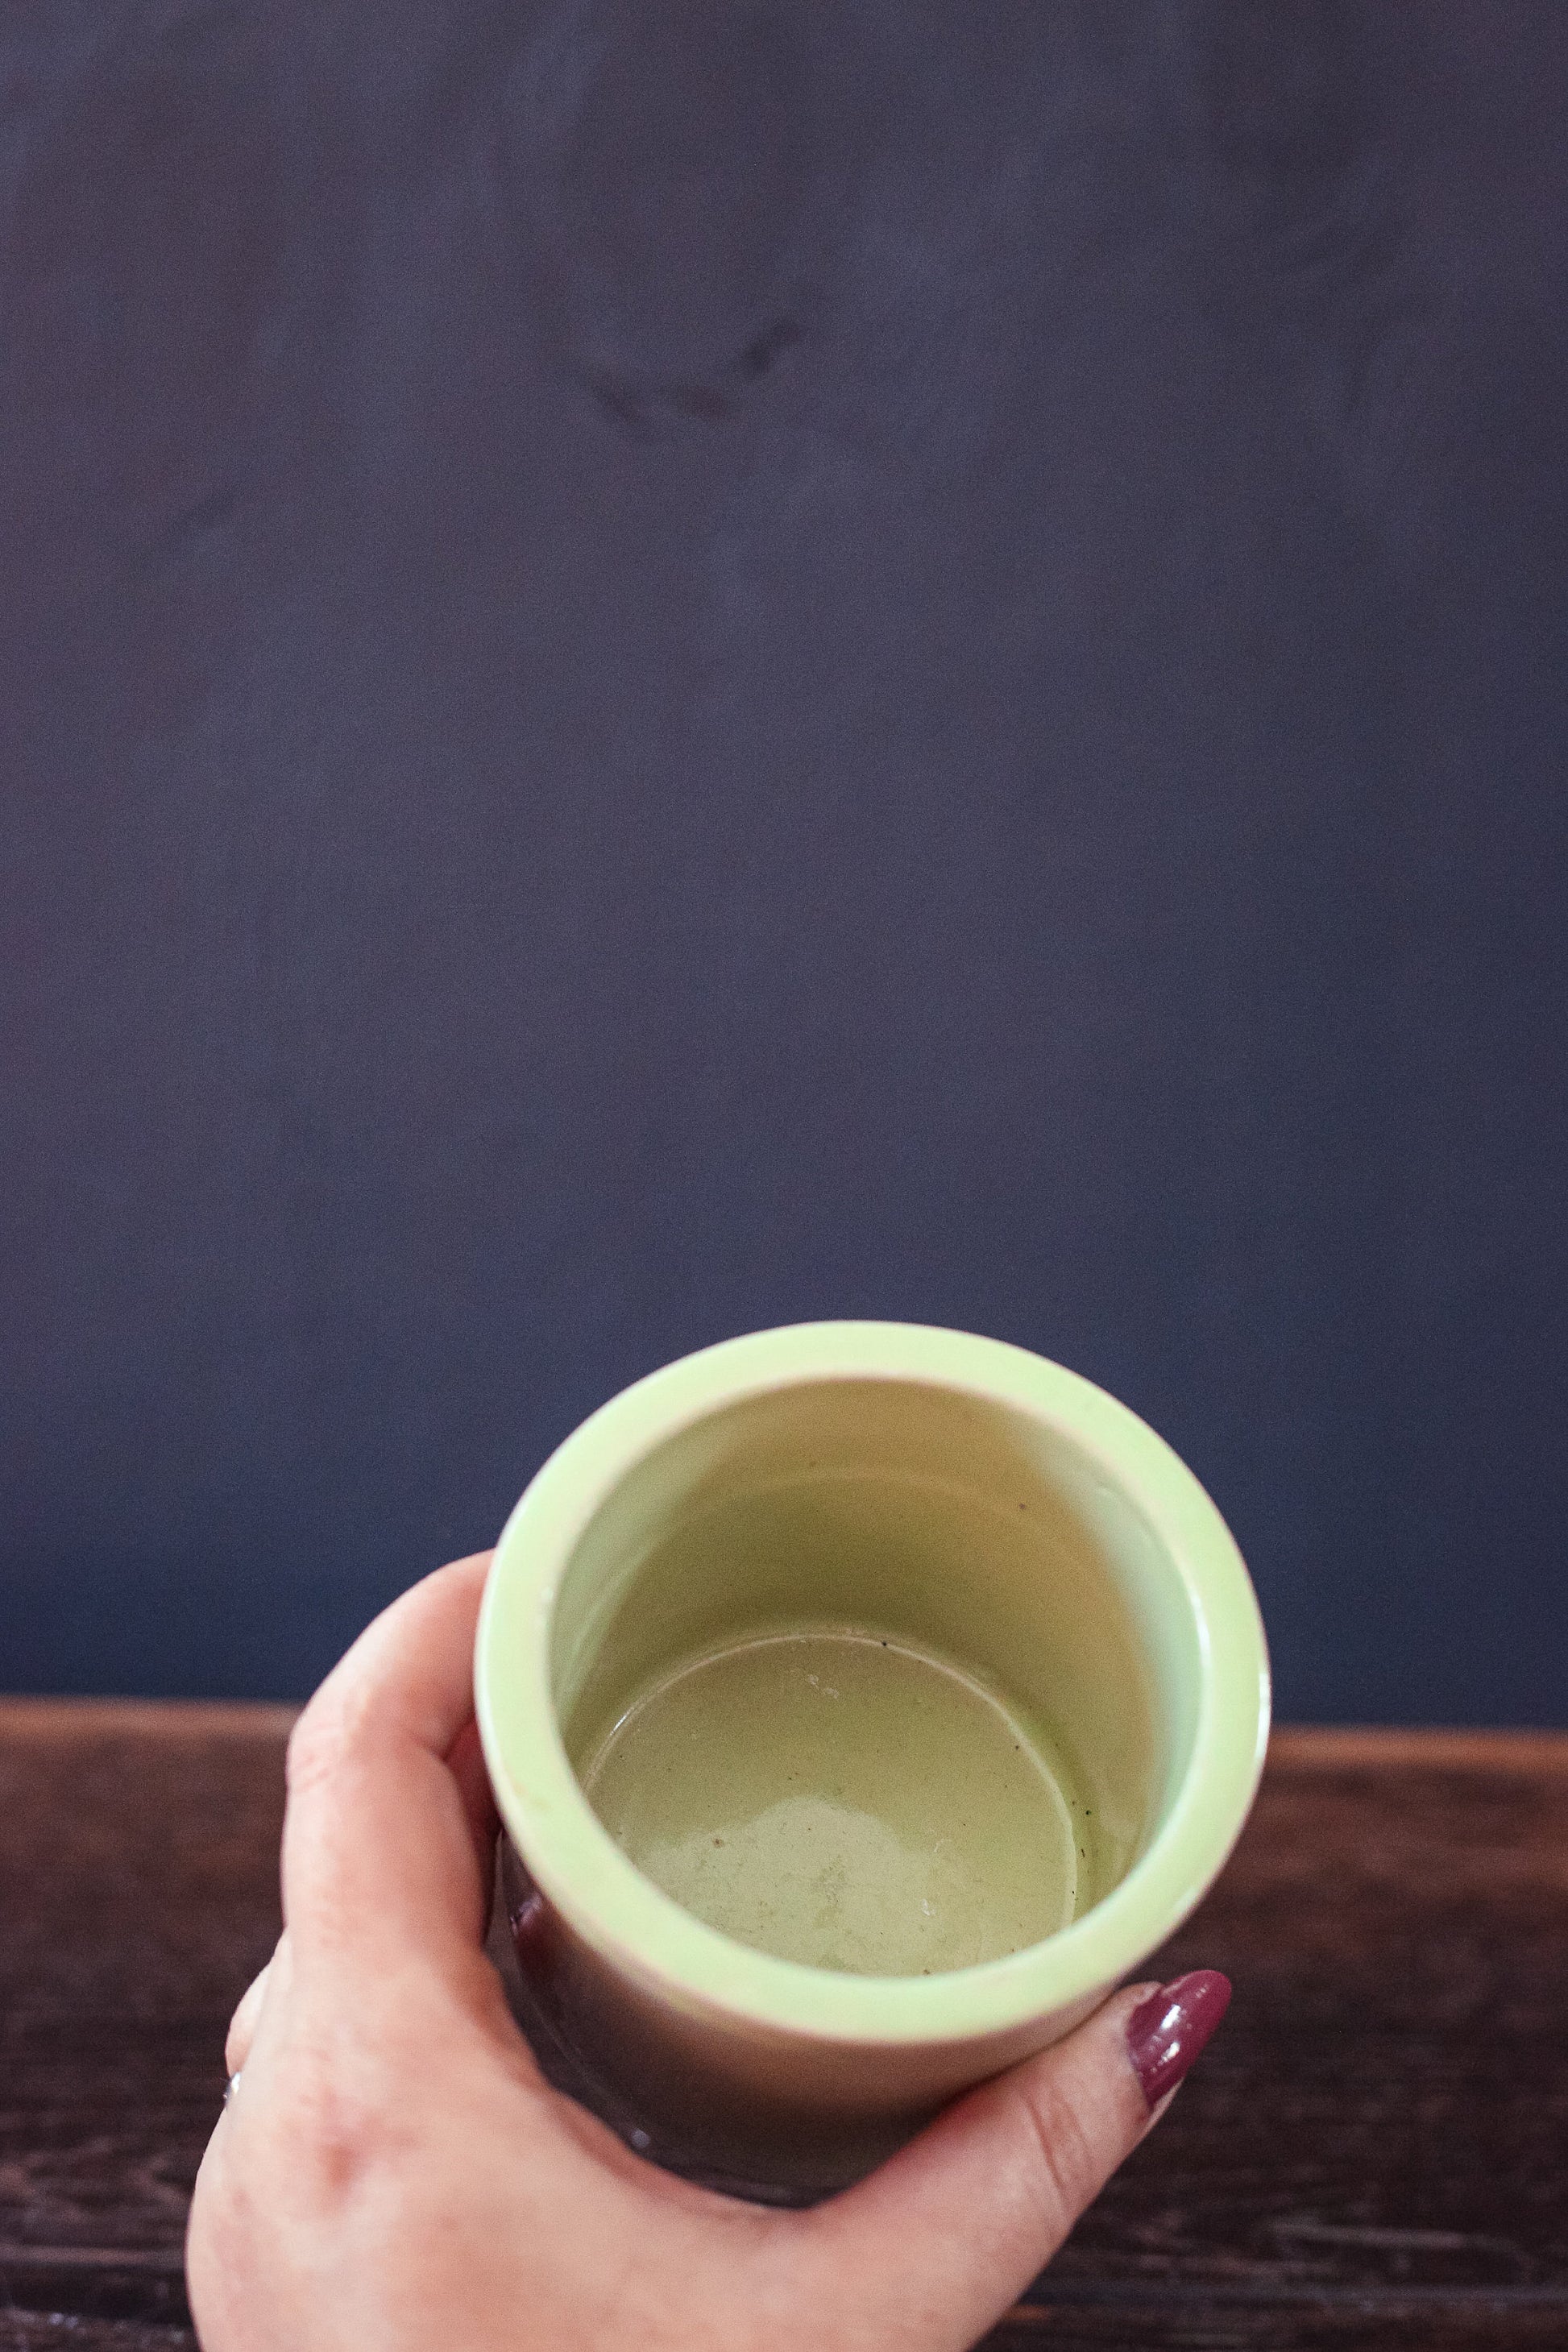 Mini Pistachio Green Cache Pot - Vintage Ceramic Container